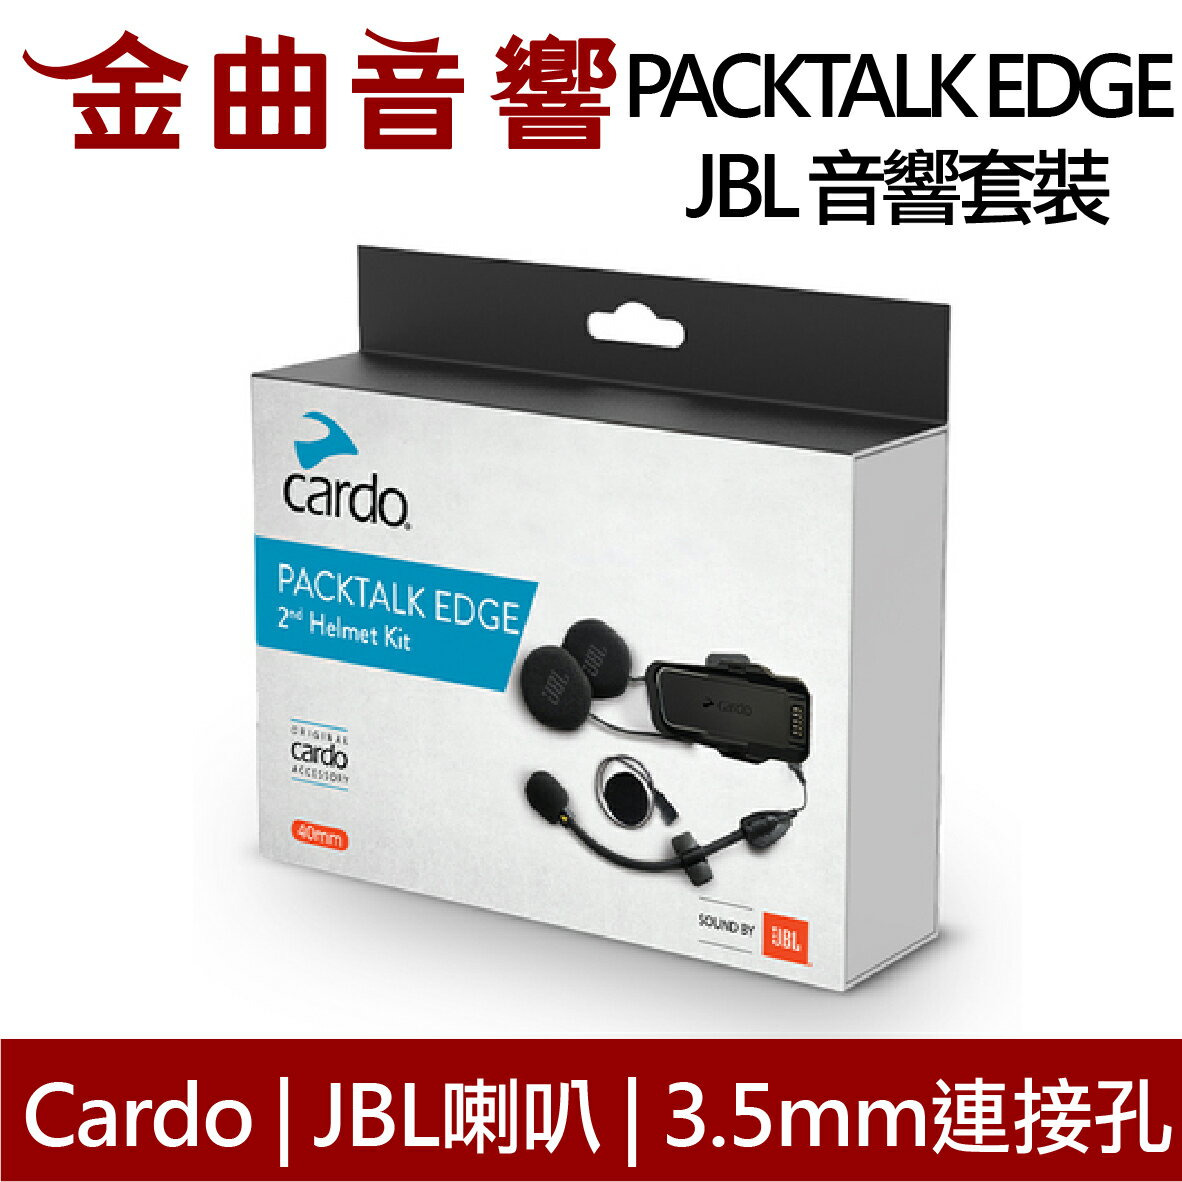 Cardo PACKTALK EDGE JBL 音響套裝 相容 PACKTALK EDGE 耳機 | 金曲音響